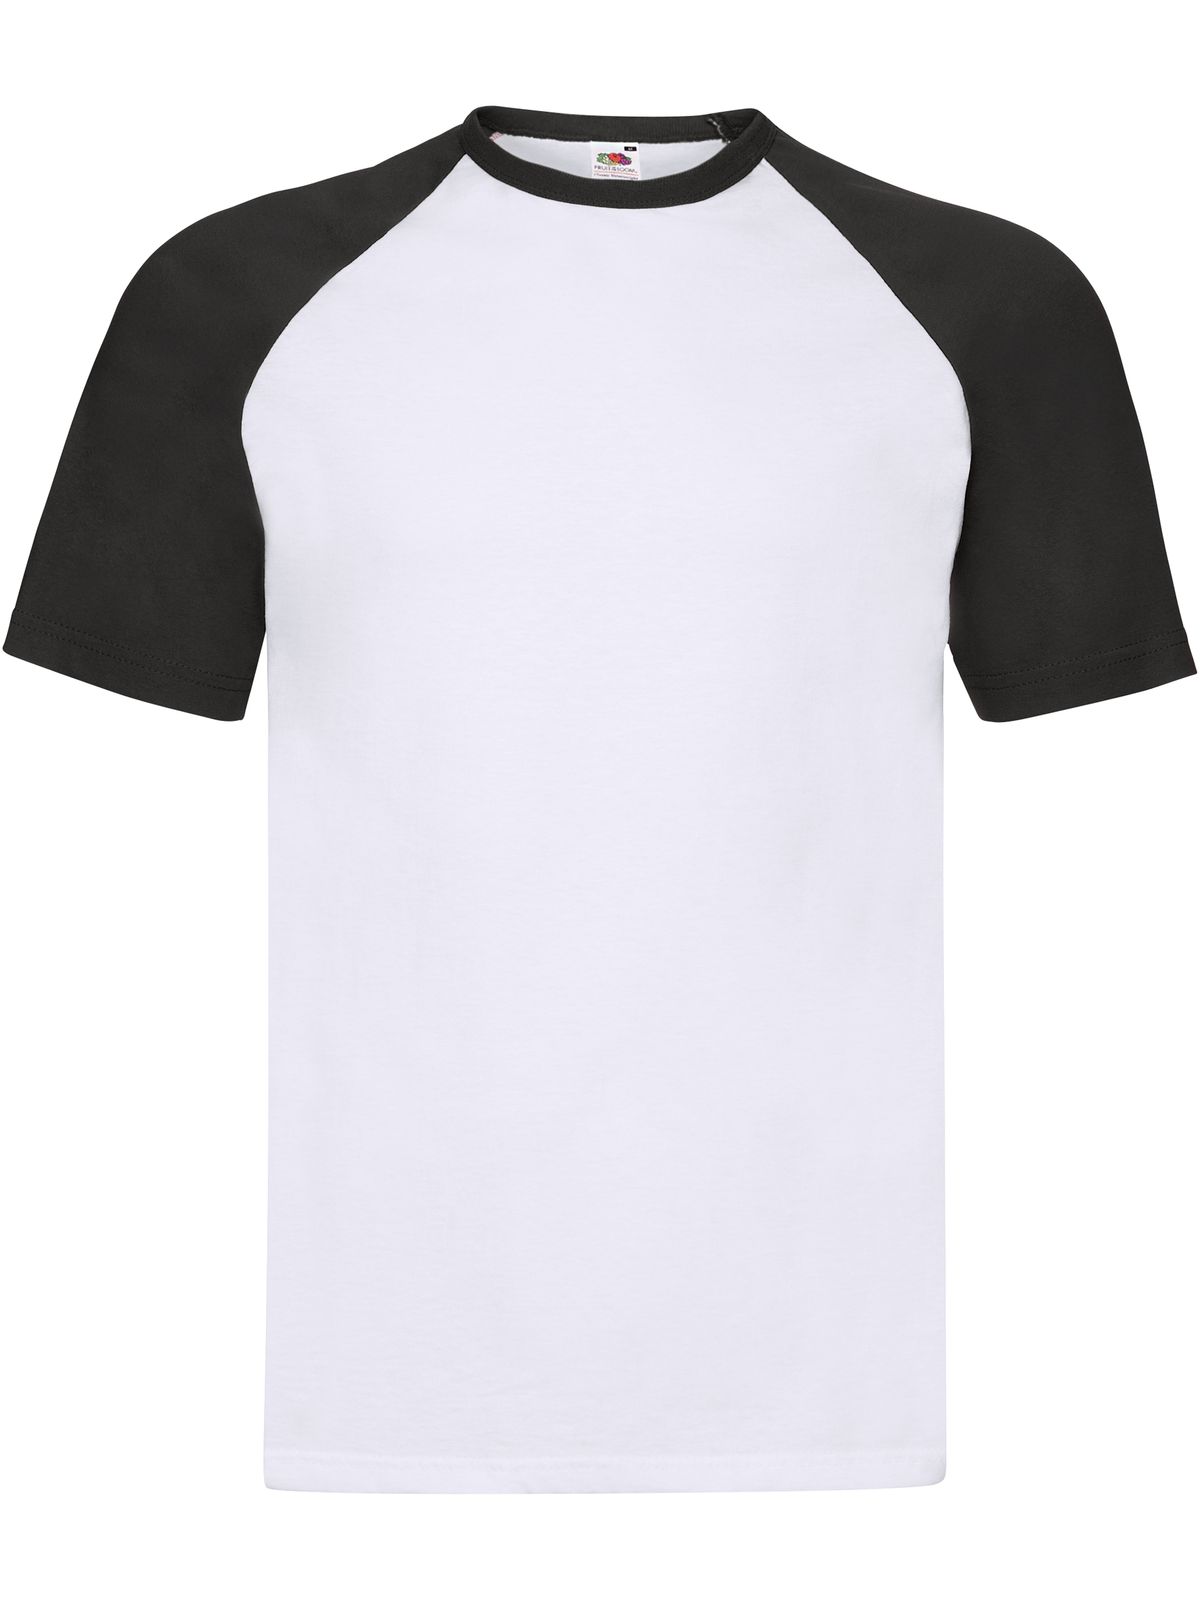 valueweight-short-sleeve-baseball-t-white-black.webp